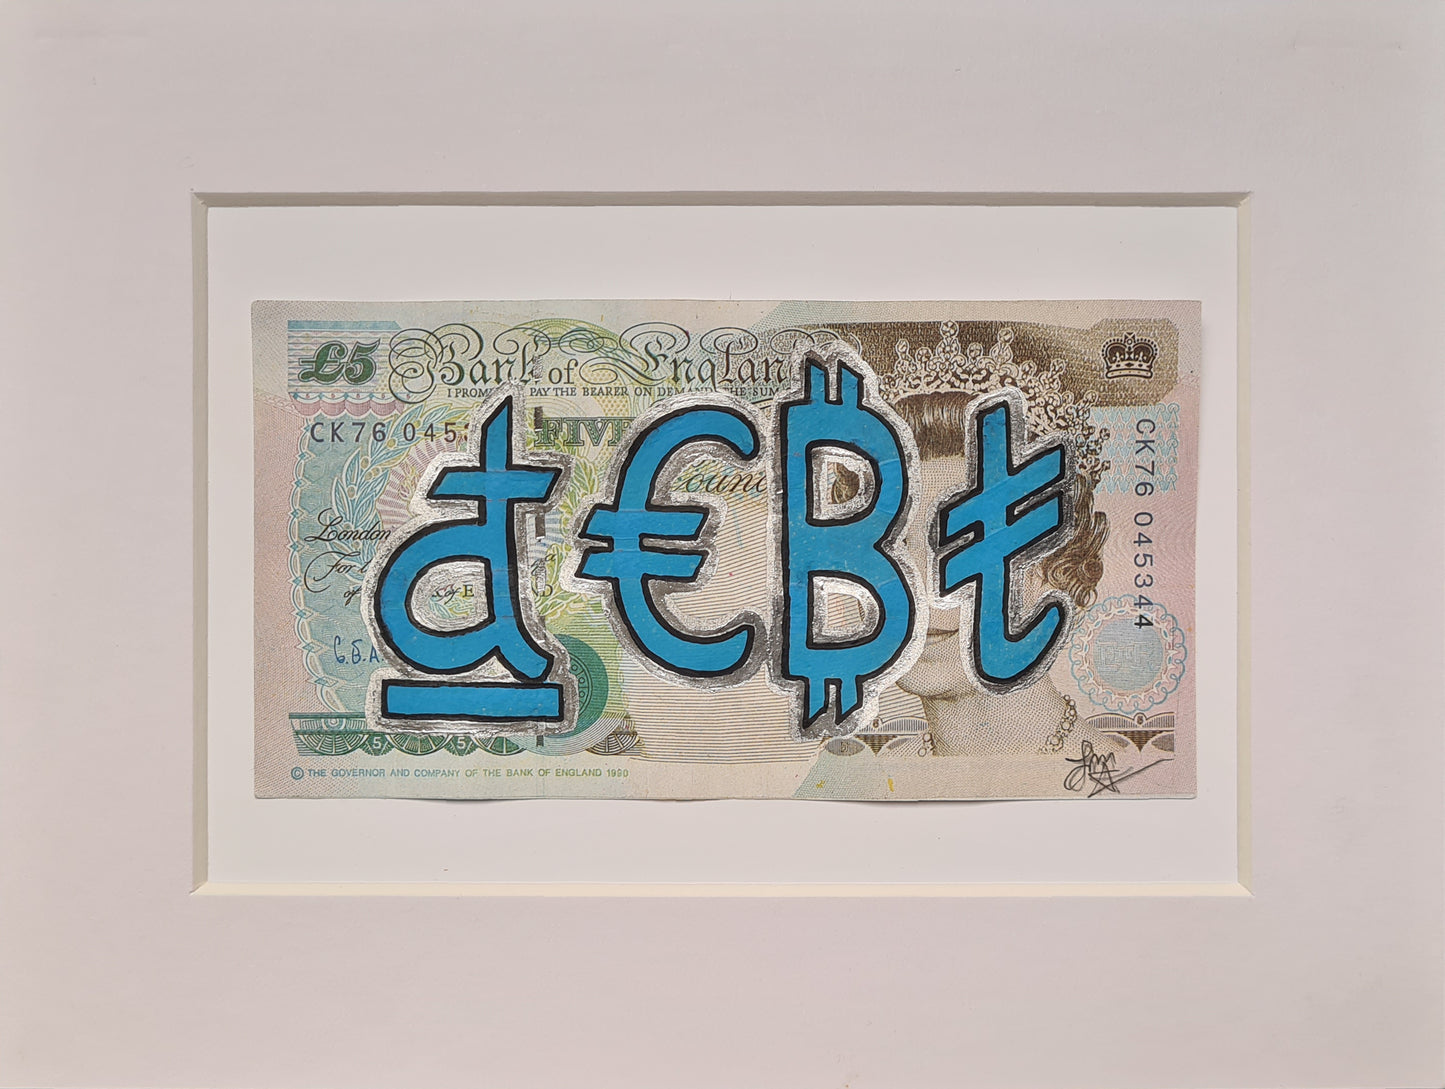 Debt (Lady Godiva) - Art on counterfeit banknote